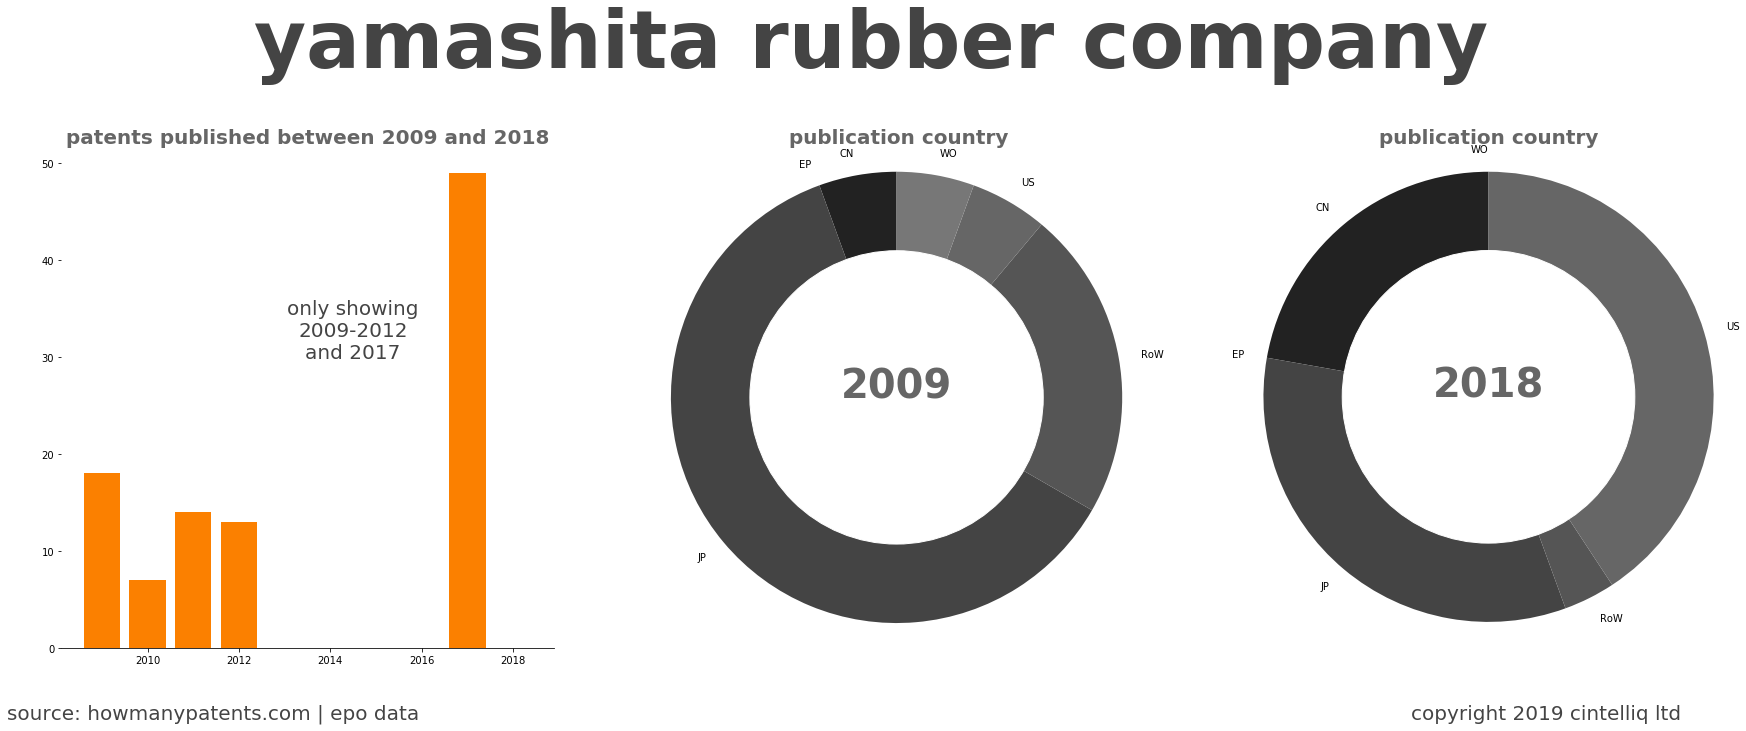 summary of patents for Yamashita Rubber Company